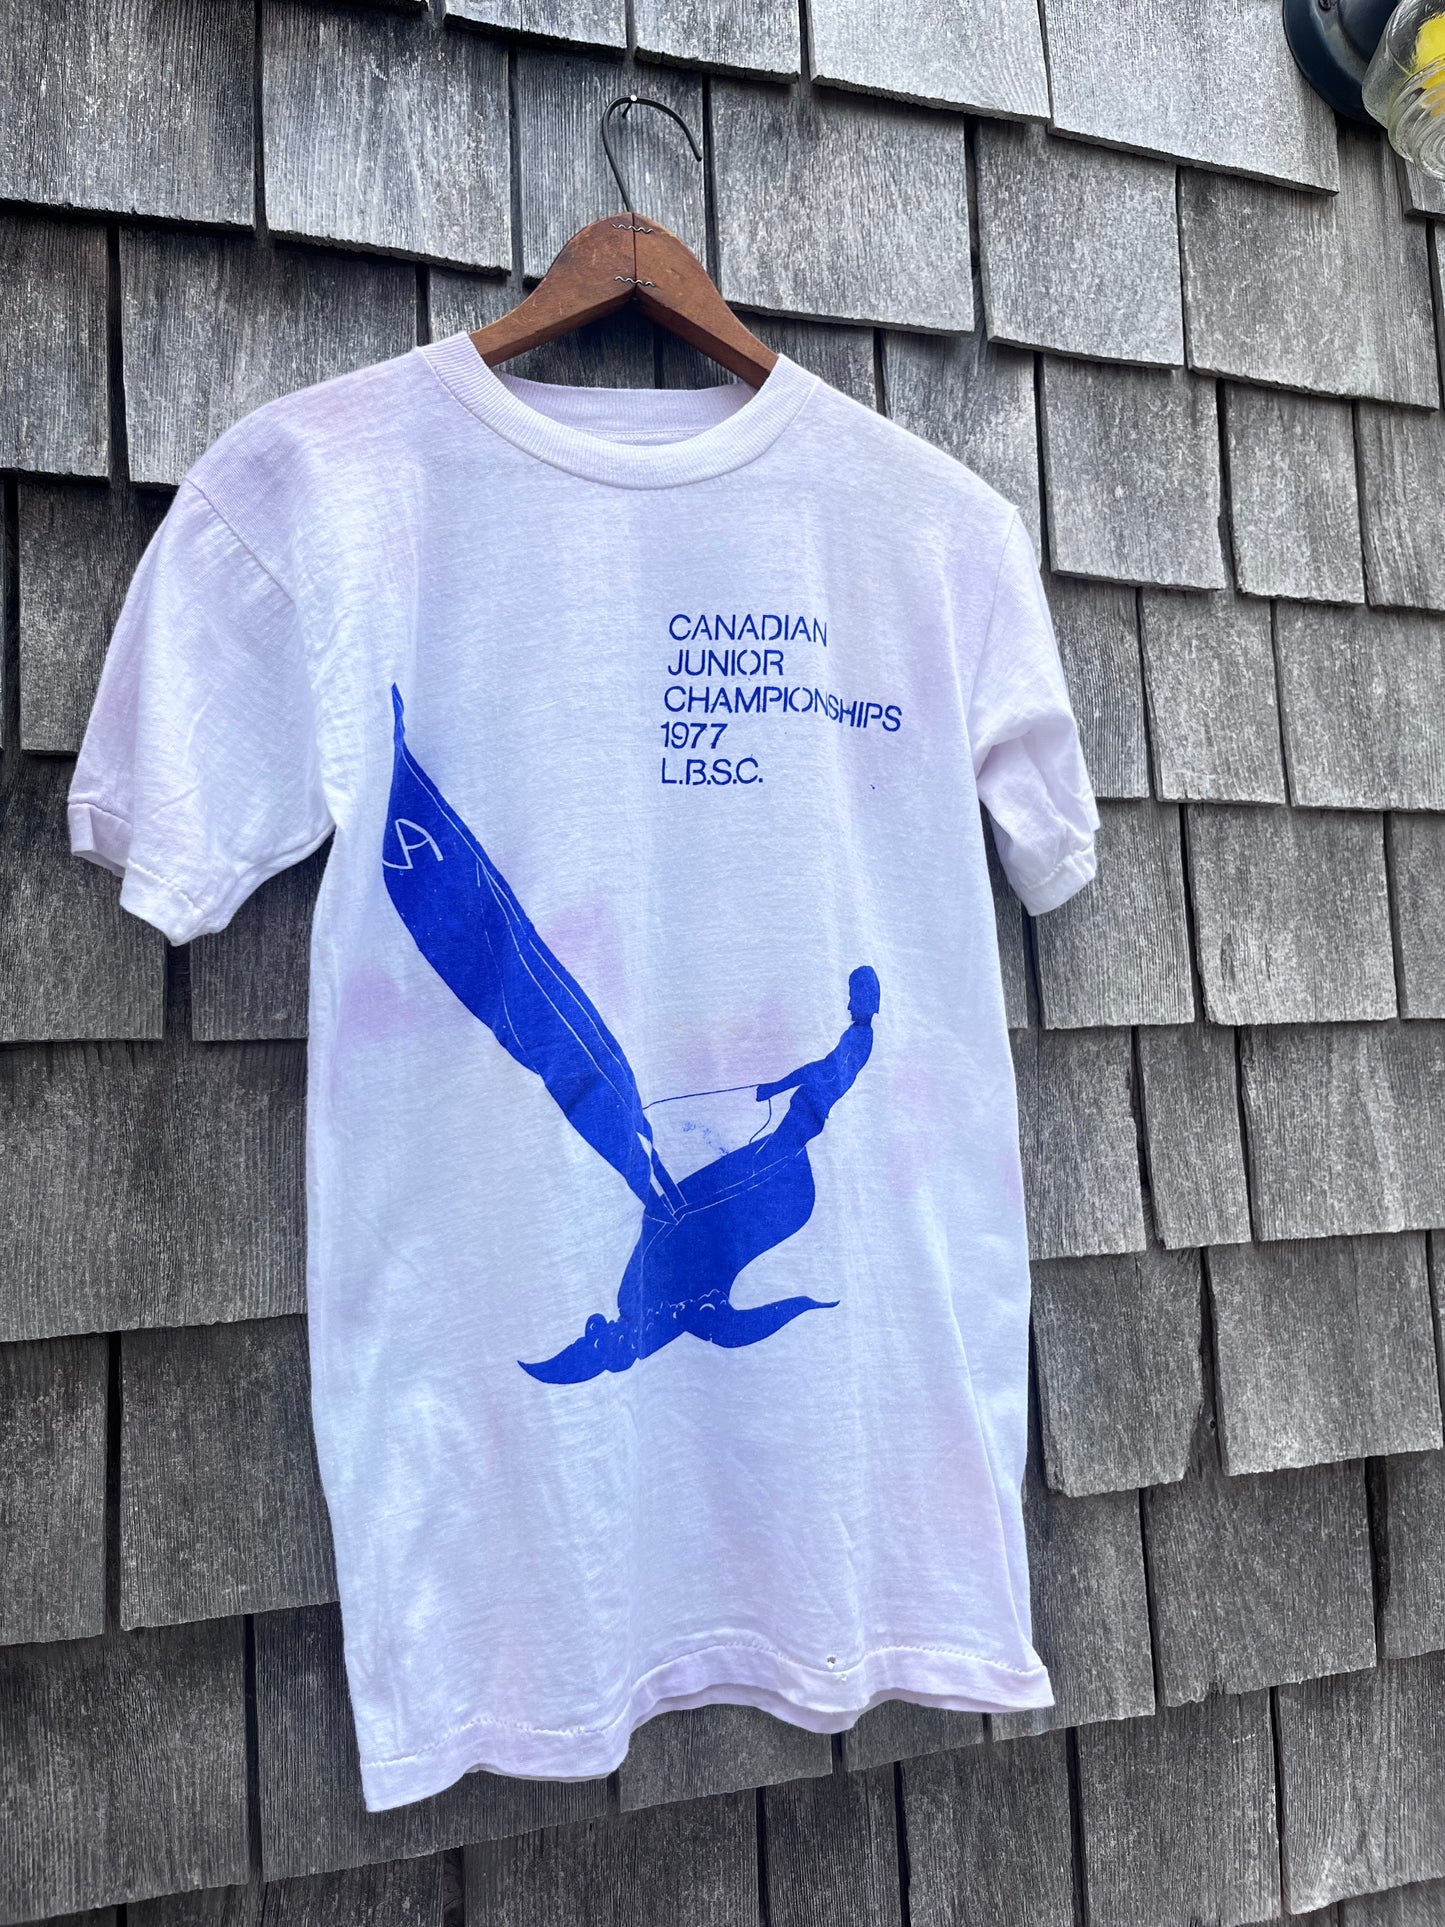 70s Canadian Junior Sailing Championships LBSC T-Shirt